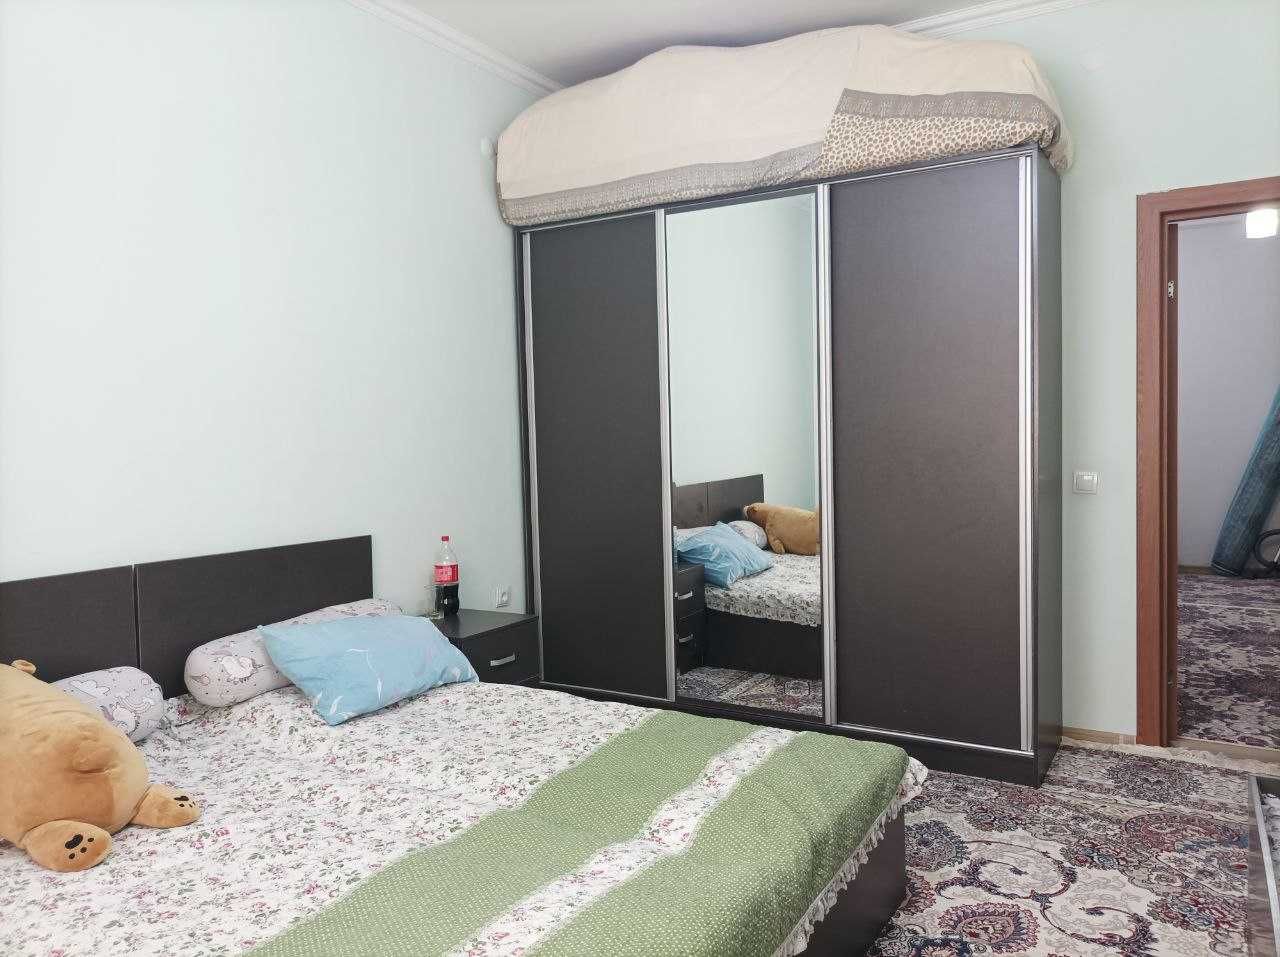 Продается 2-х комнатная квартира в М.Улугбеке (RM)